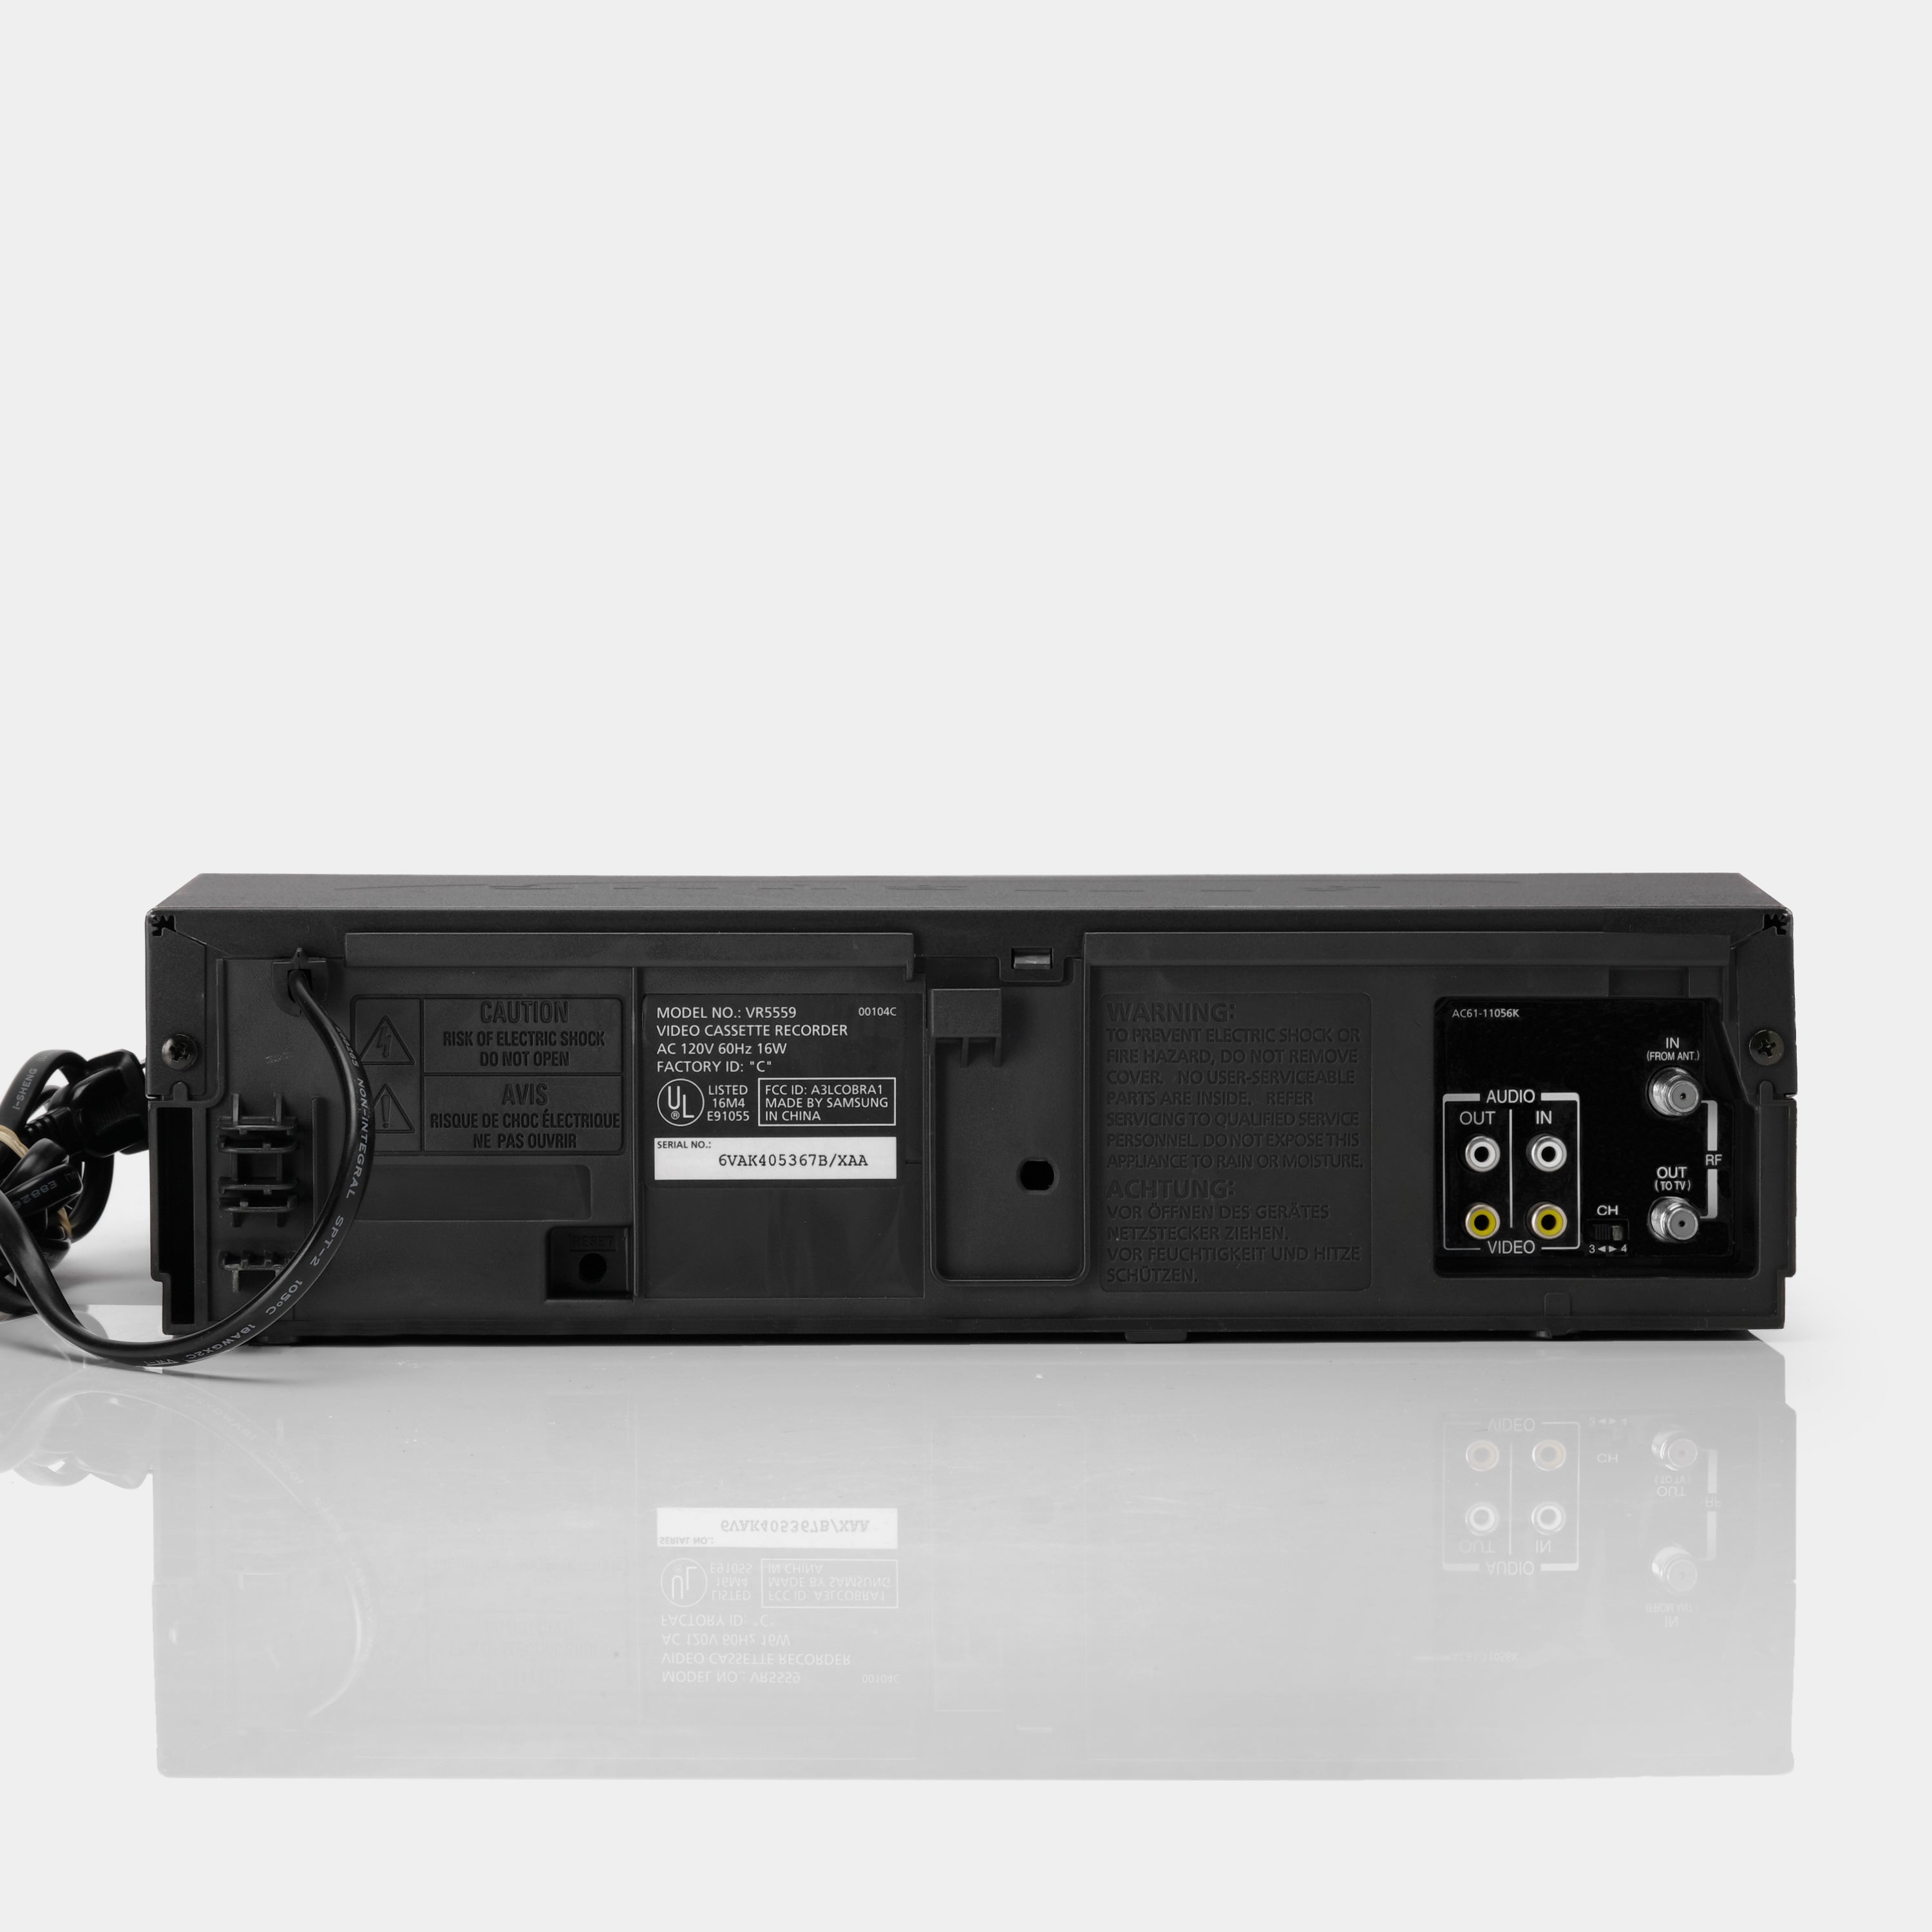 Samsung VR5559 VCR VHS Player